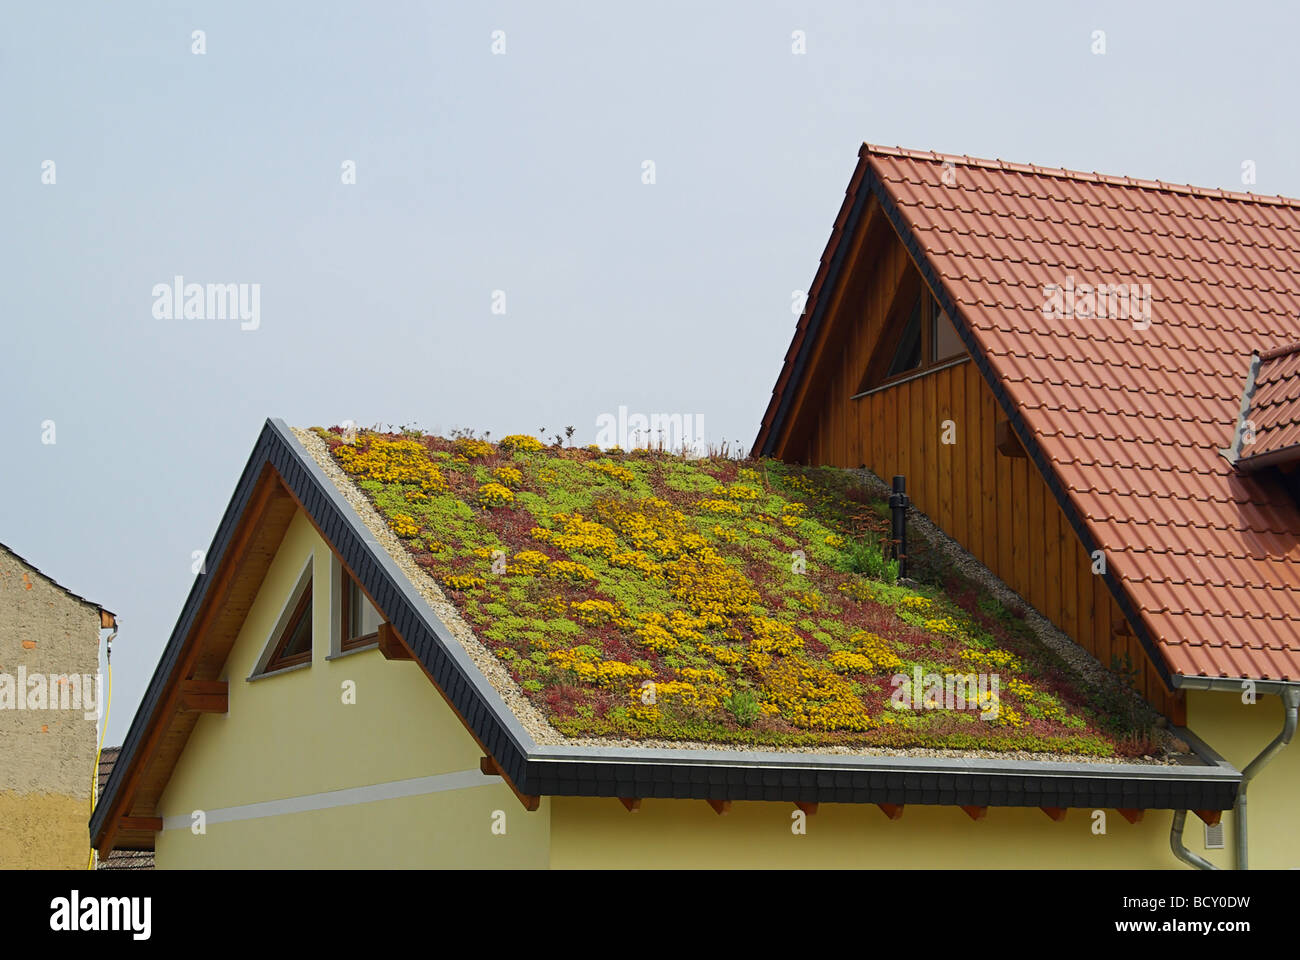 Gründach green roof 01 Stock Photo